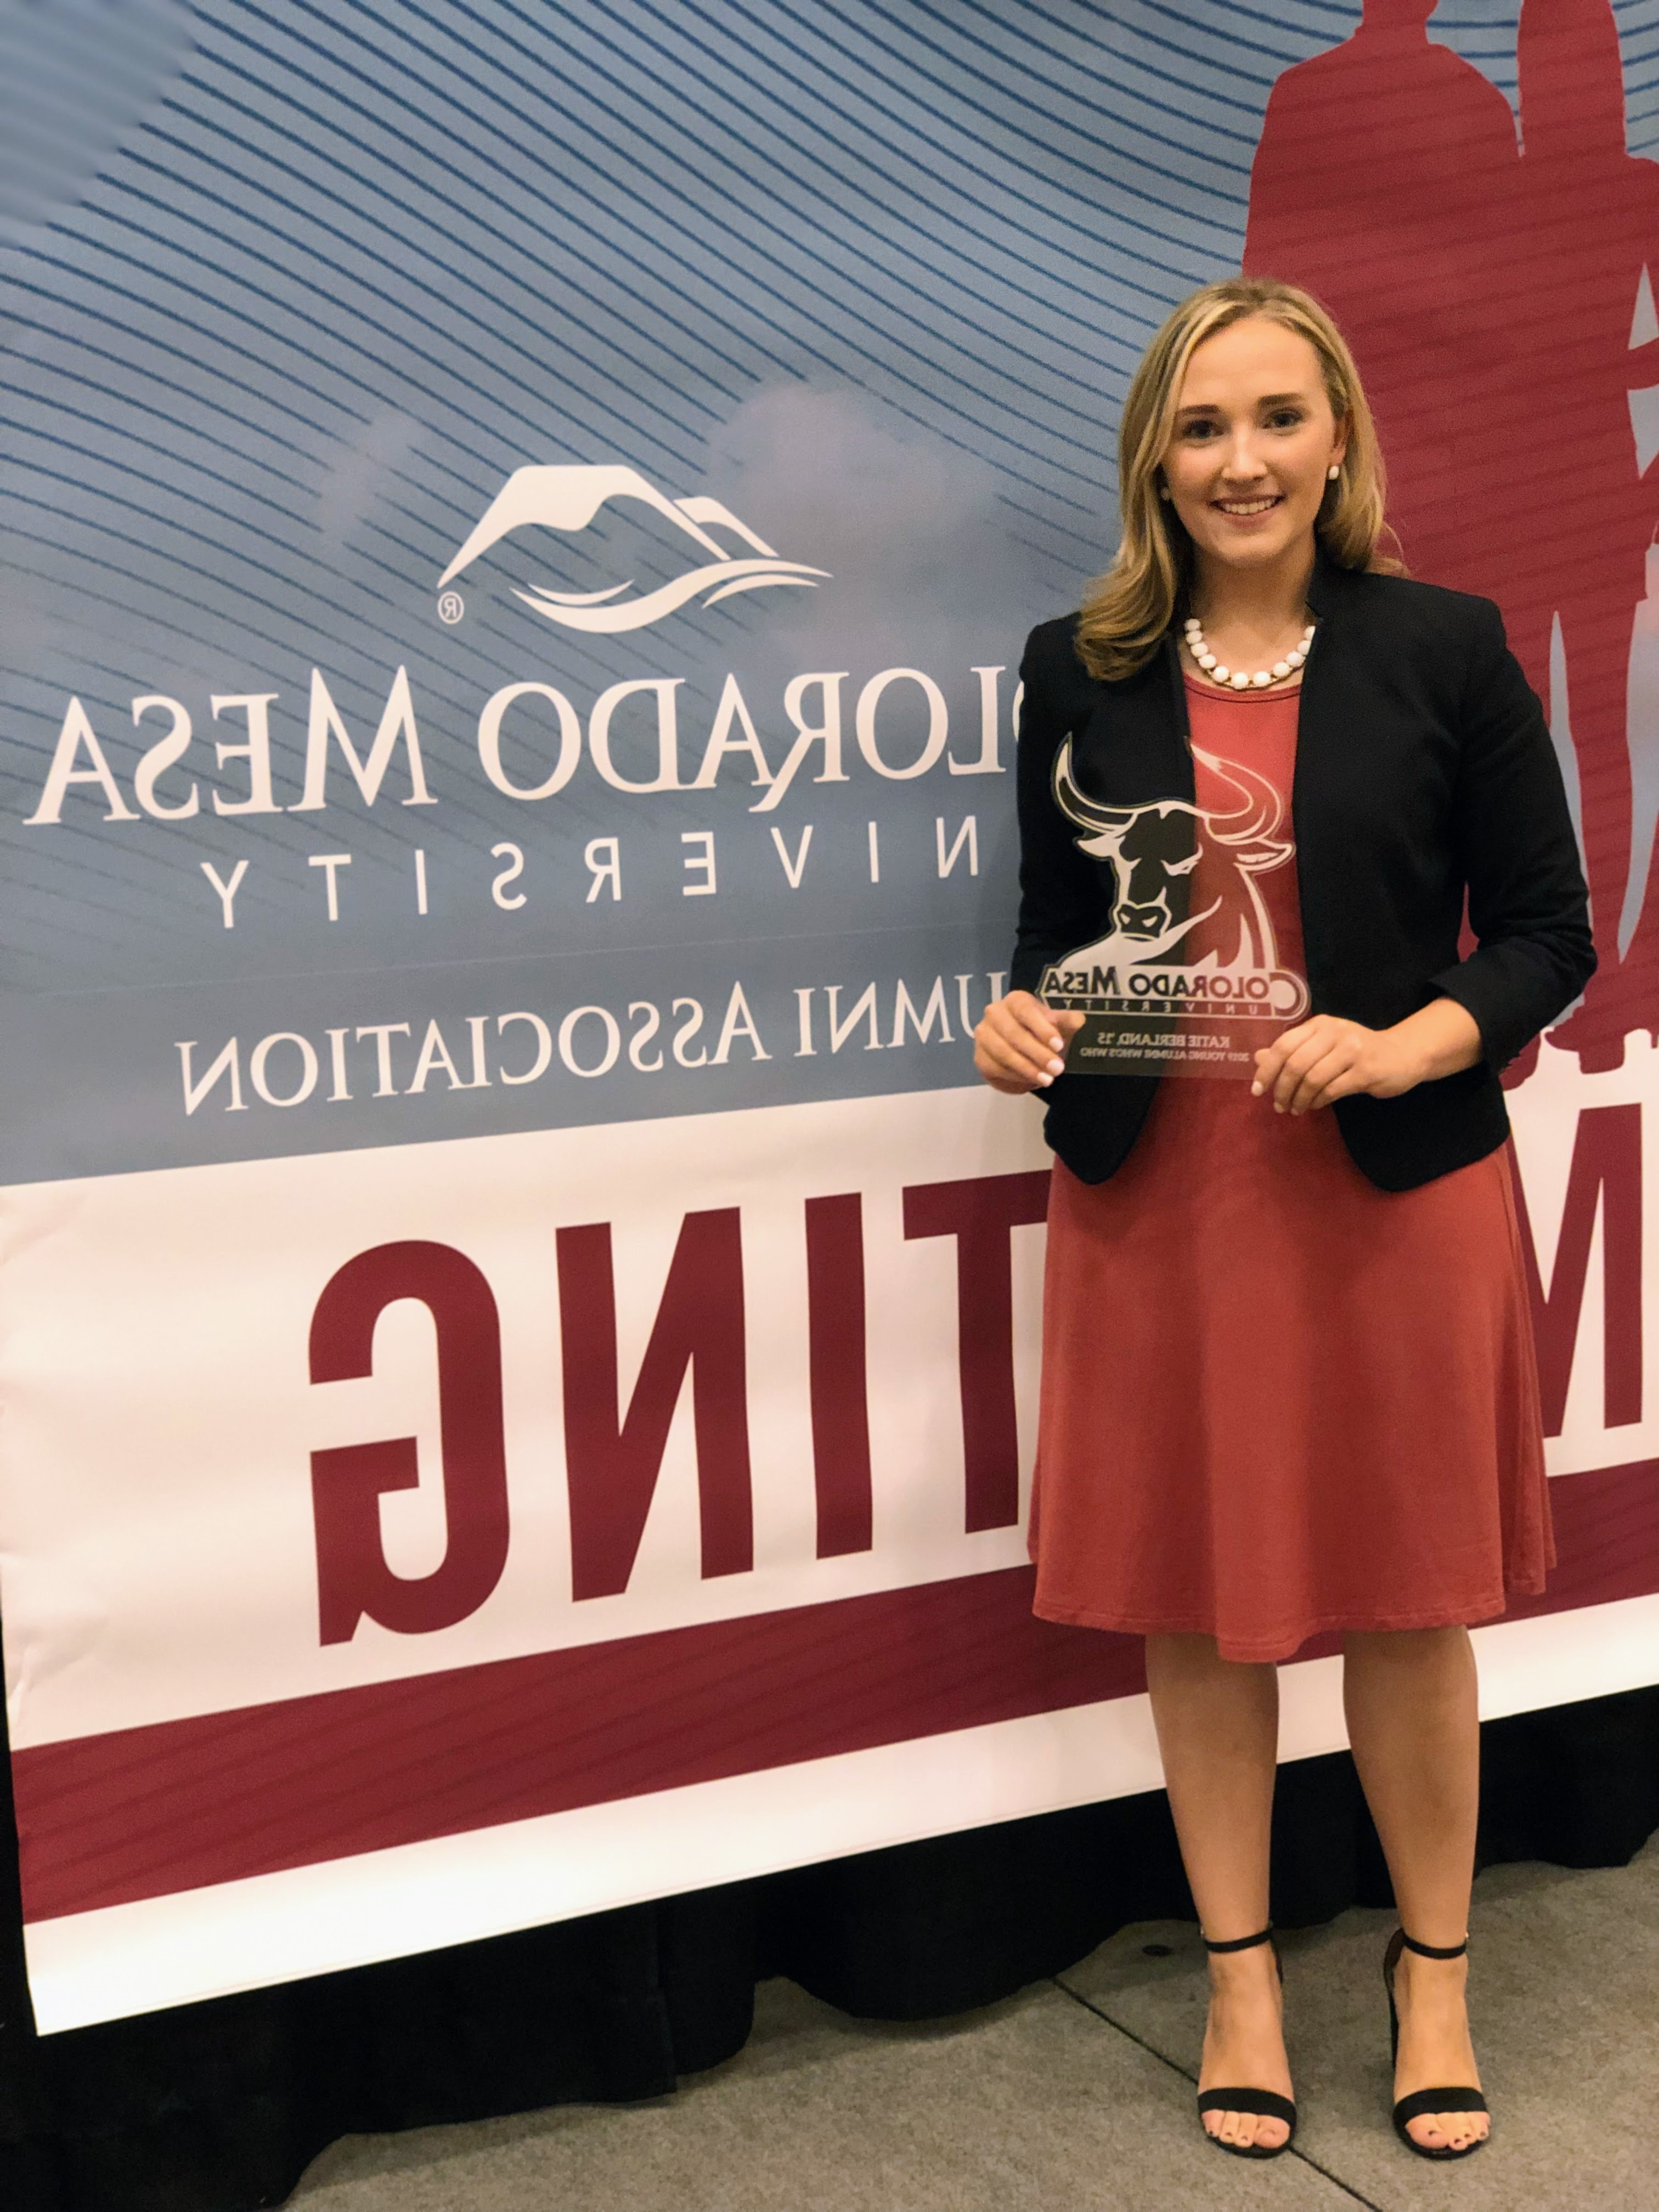 Katie won the CMU Alumni Association Who's Who Award in 2019